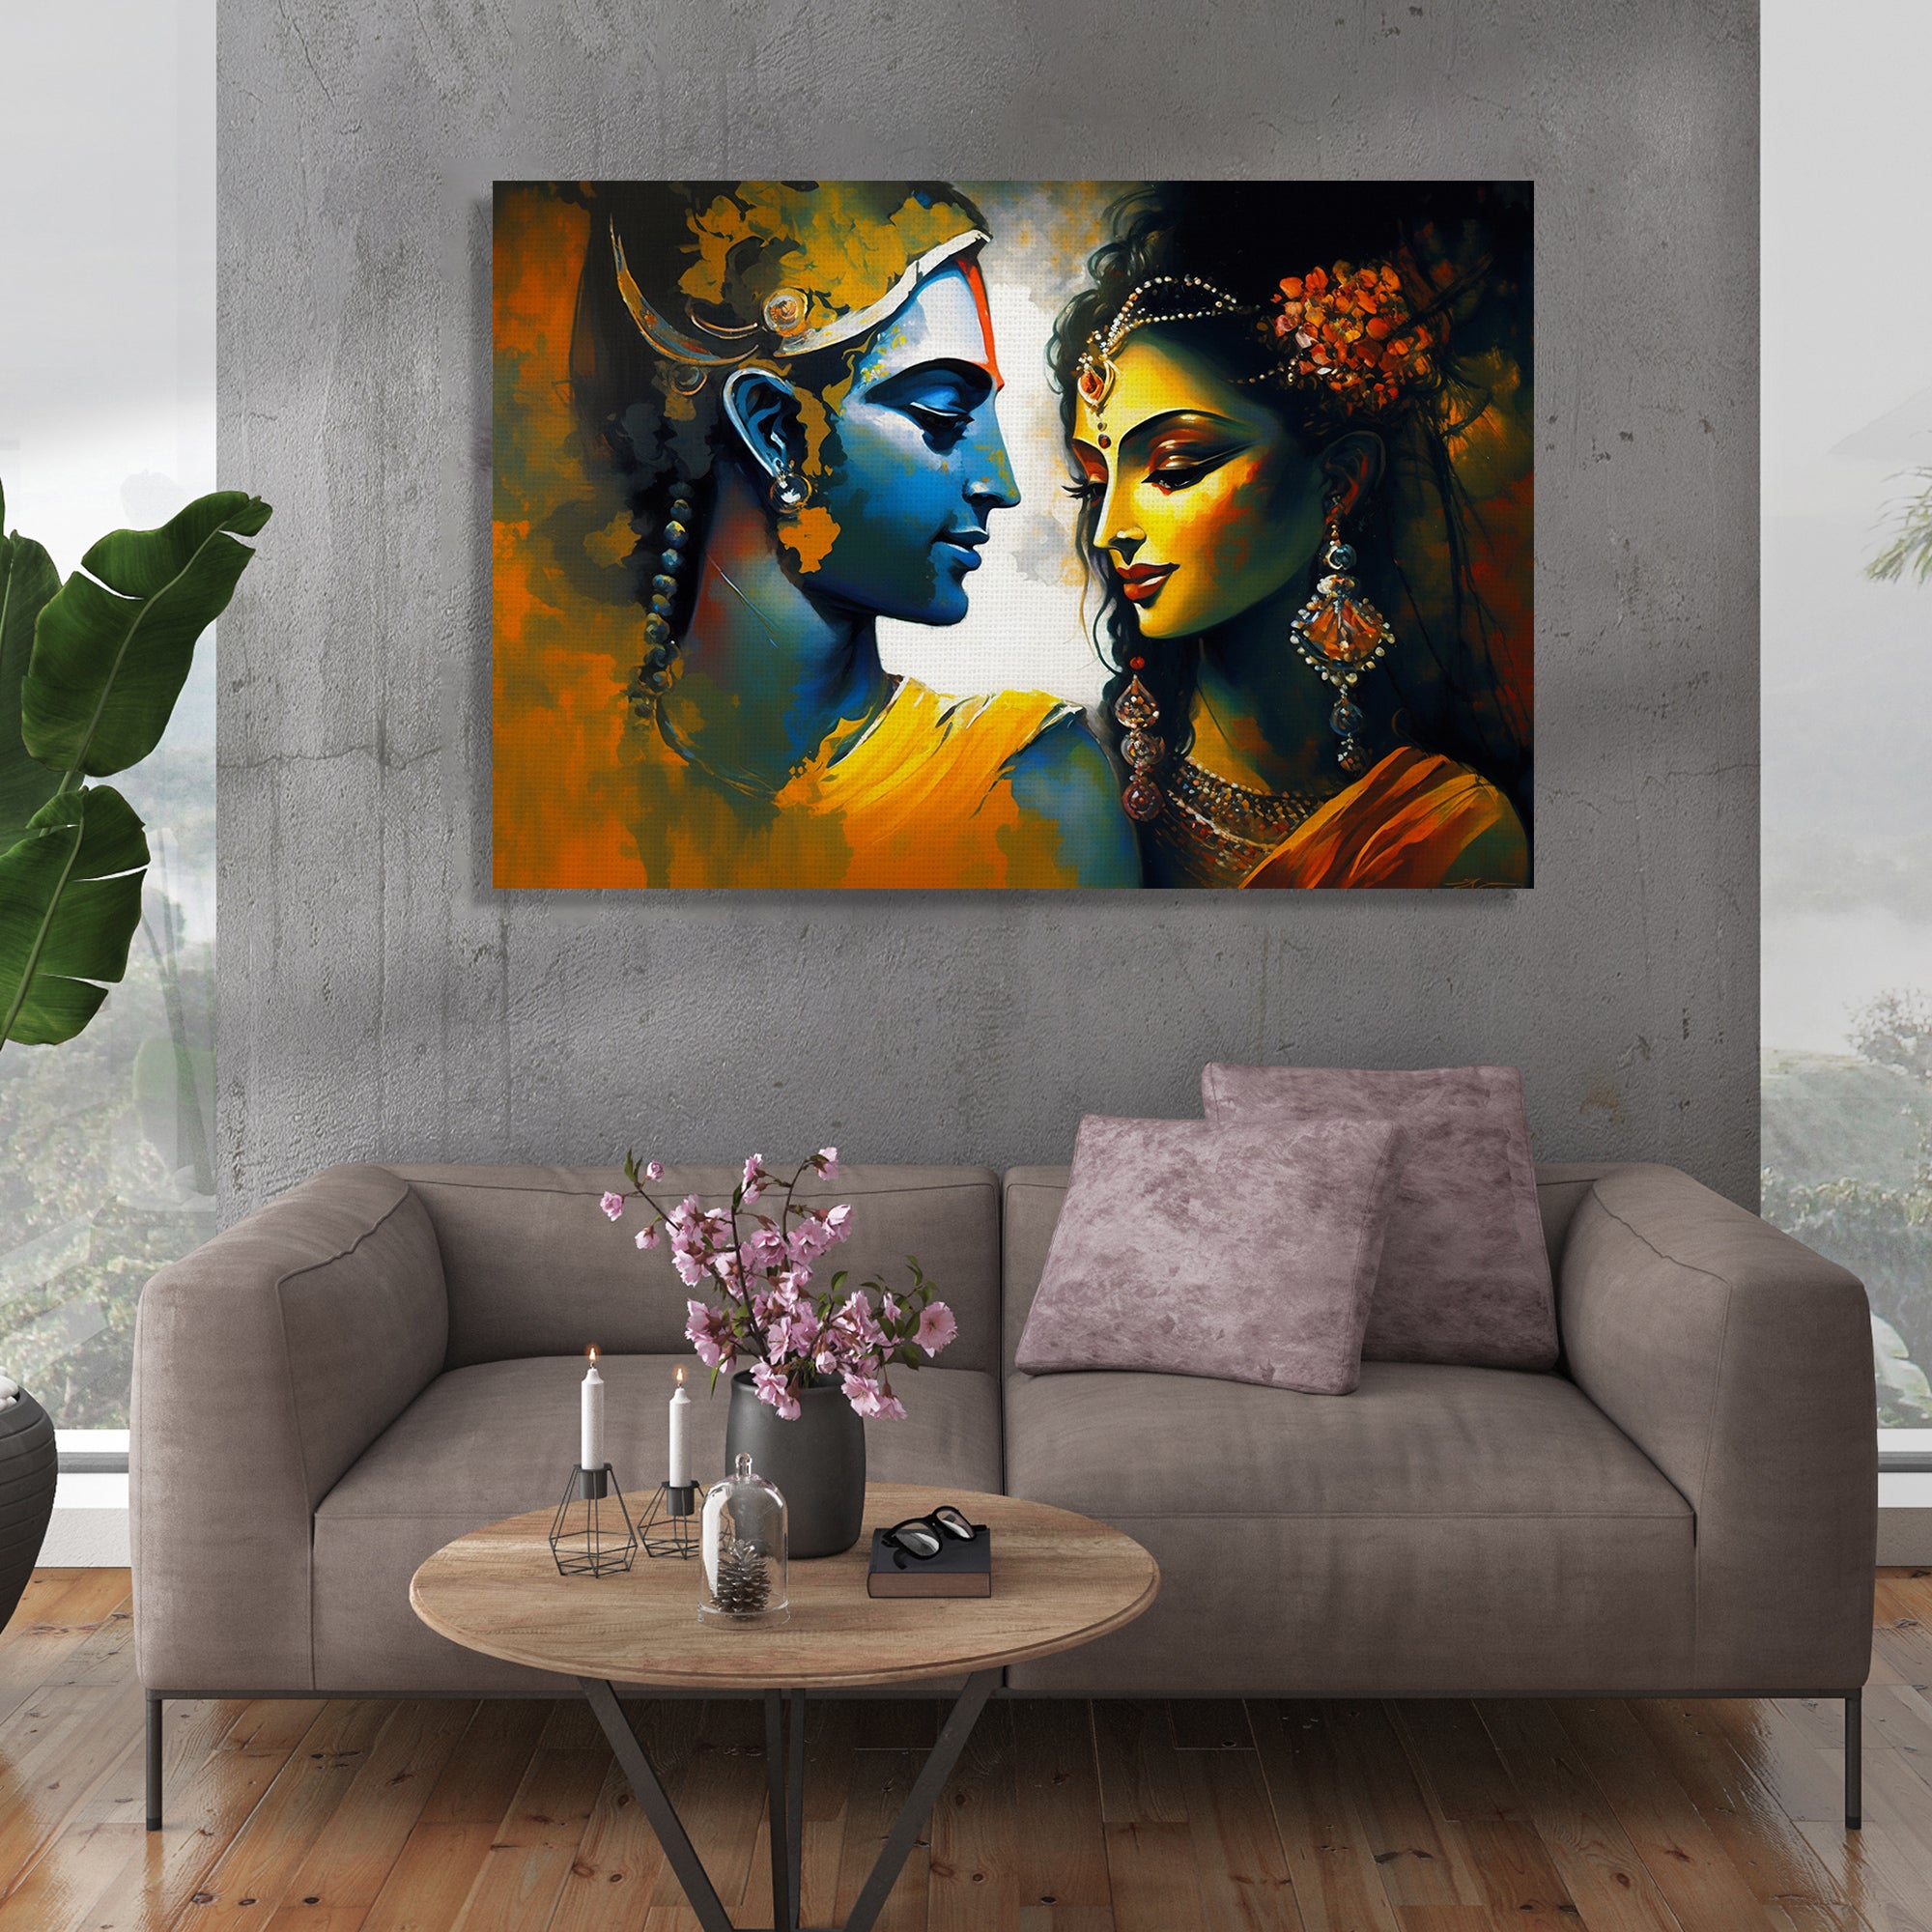 Radha Krishna Painting Hindu God and Goddess Love Scene Art On Paper 8x12  Inches | eBay